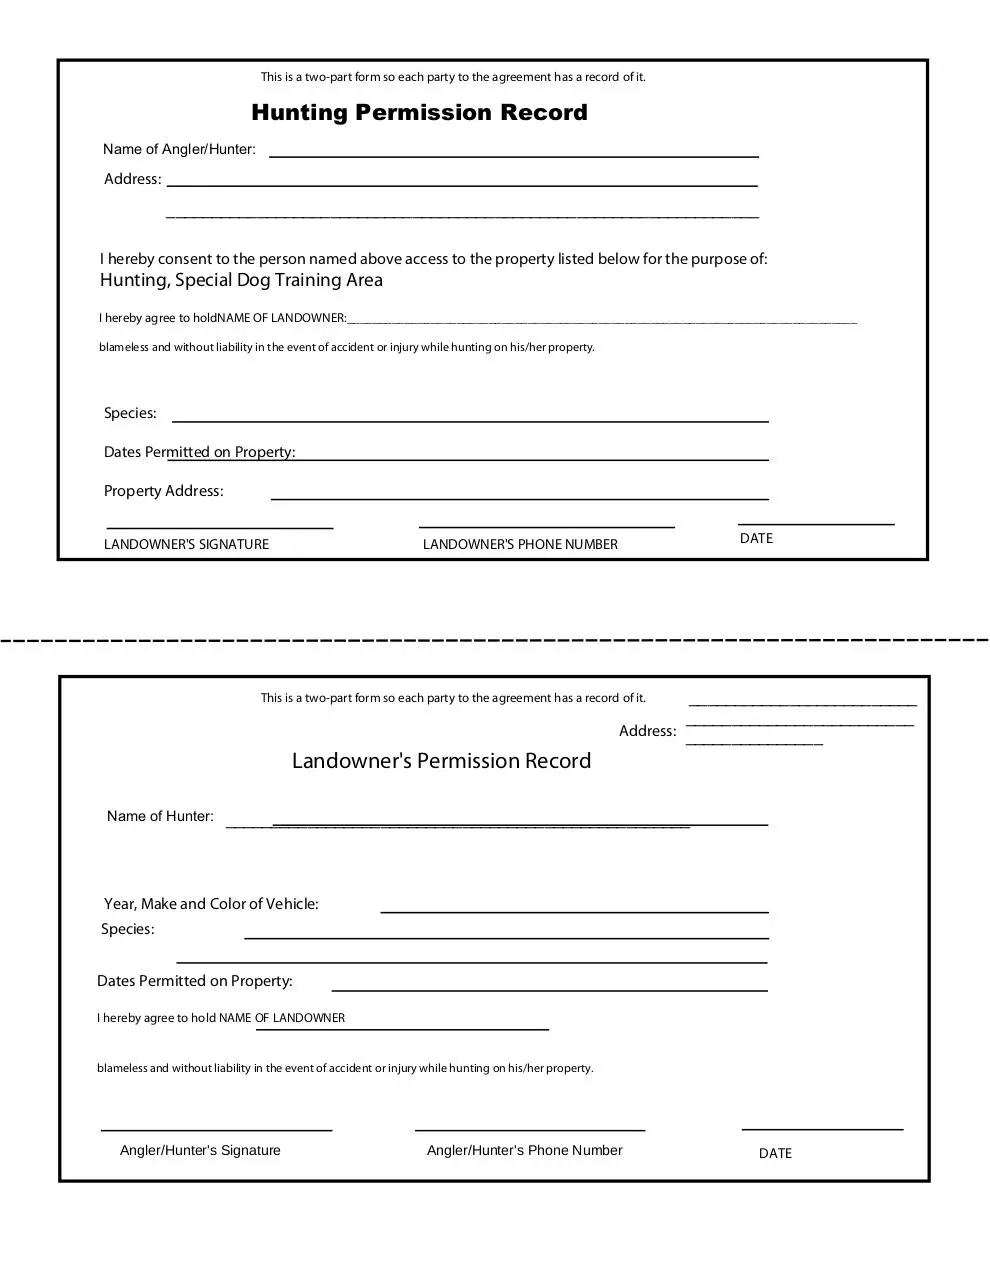 Document preview - LandownersFormblank.pdf - Page 1/1